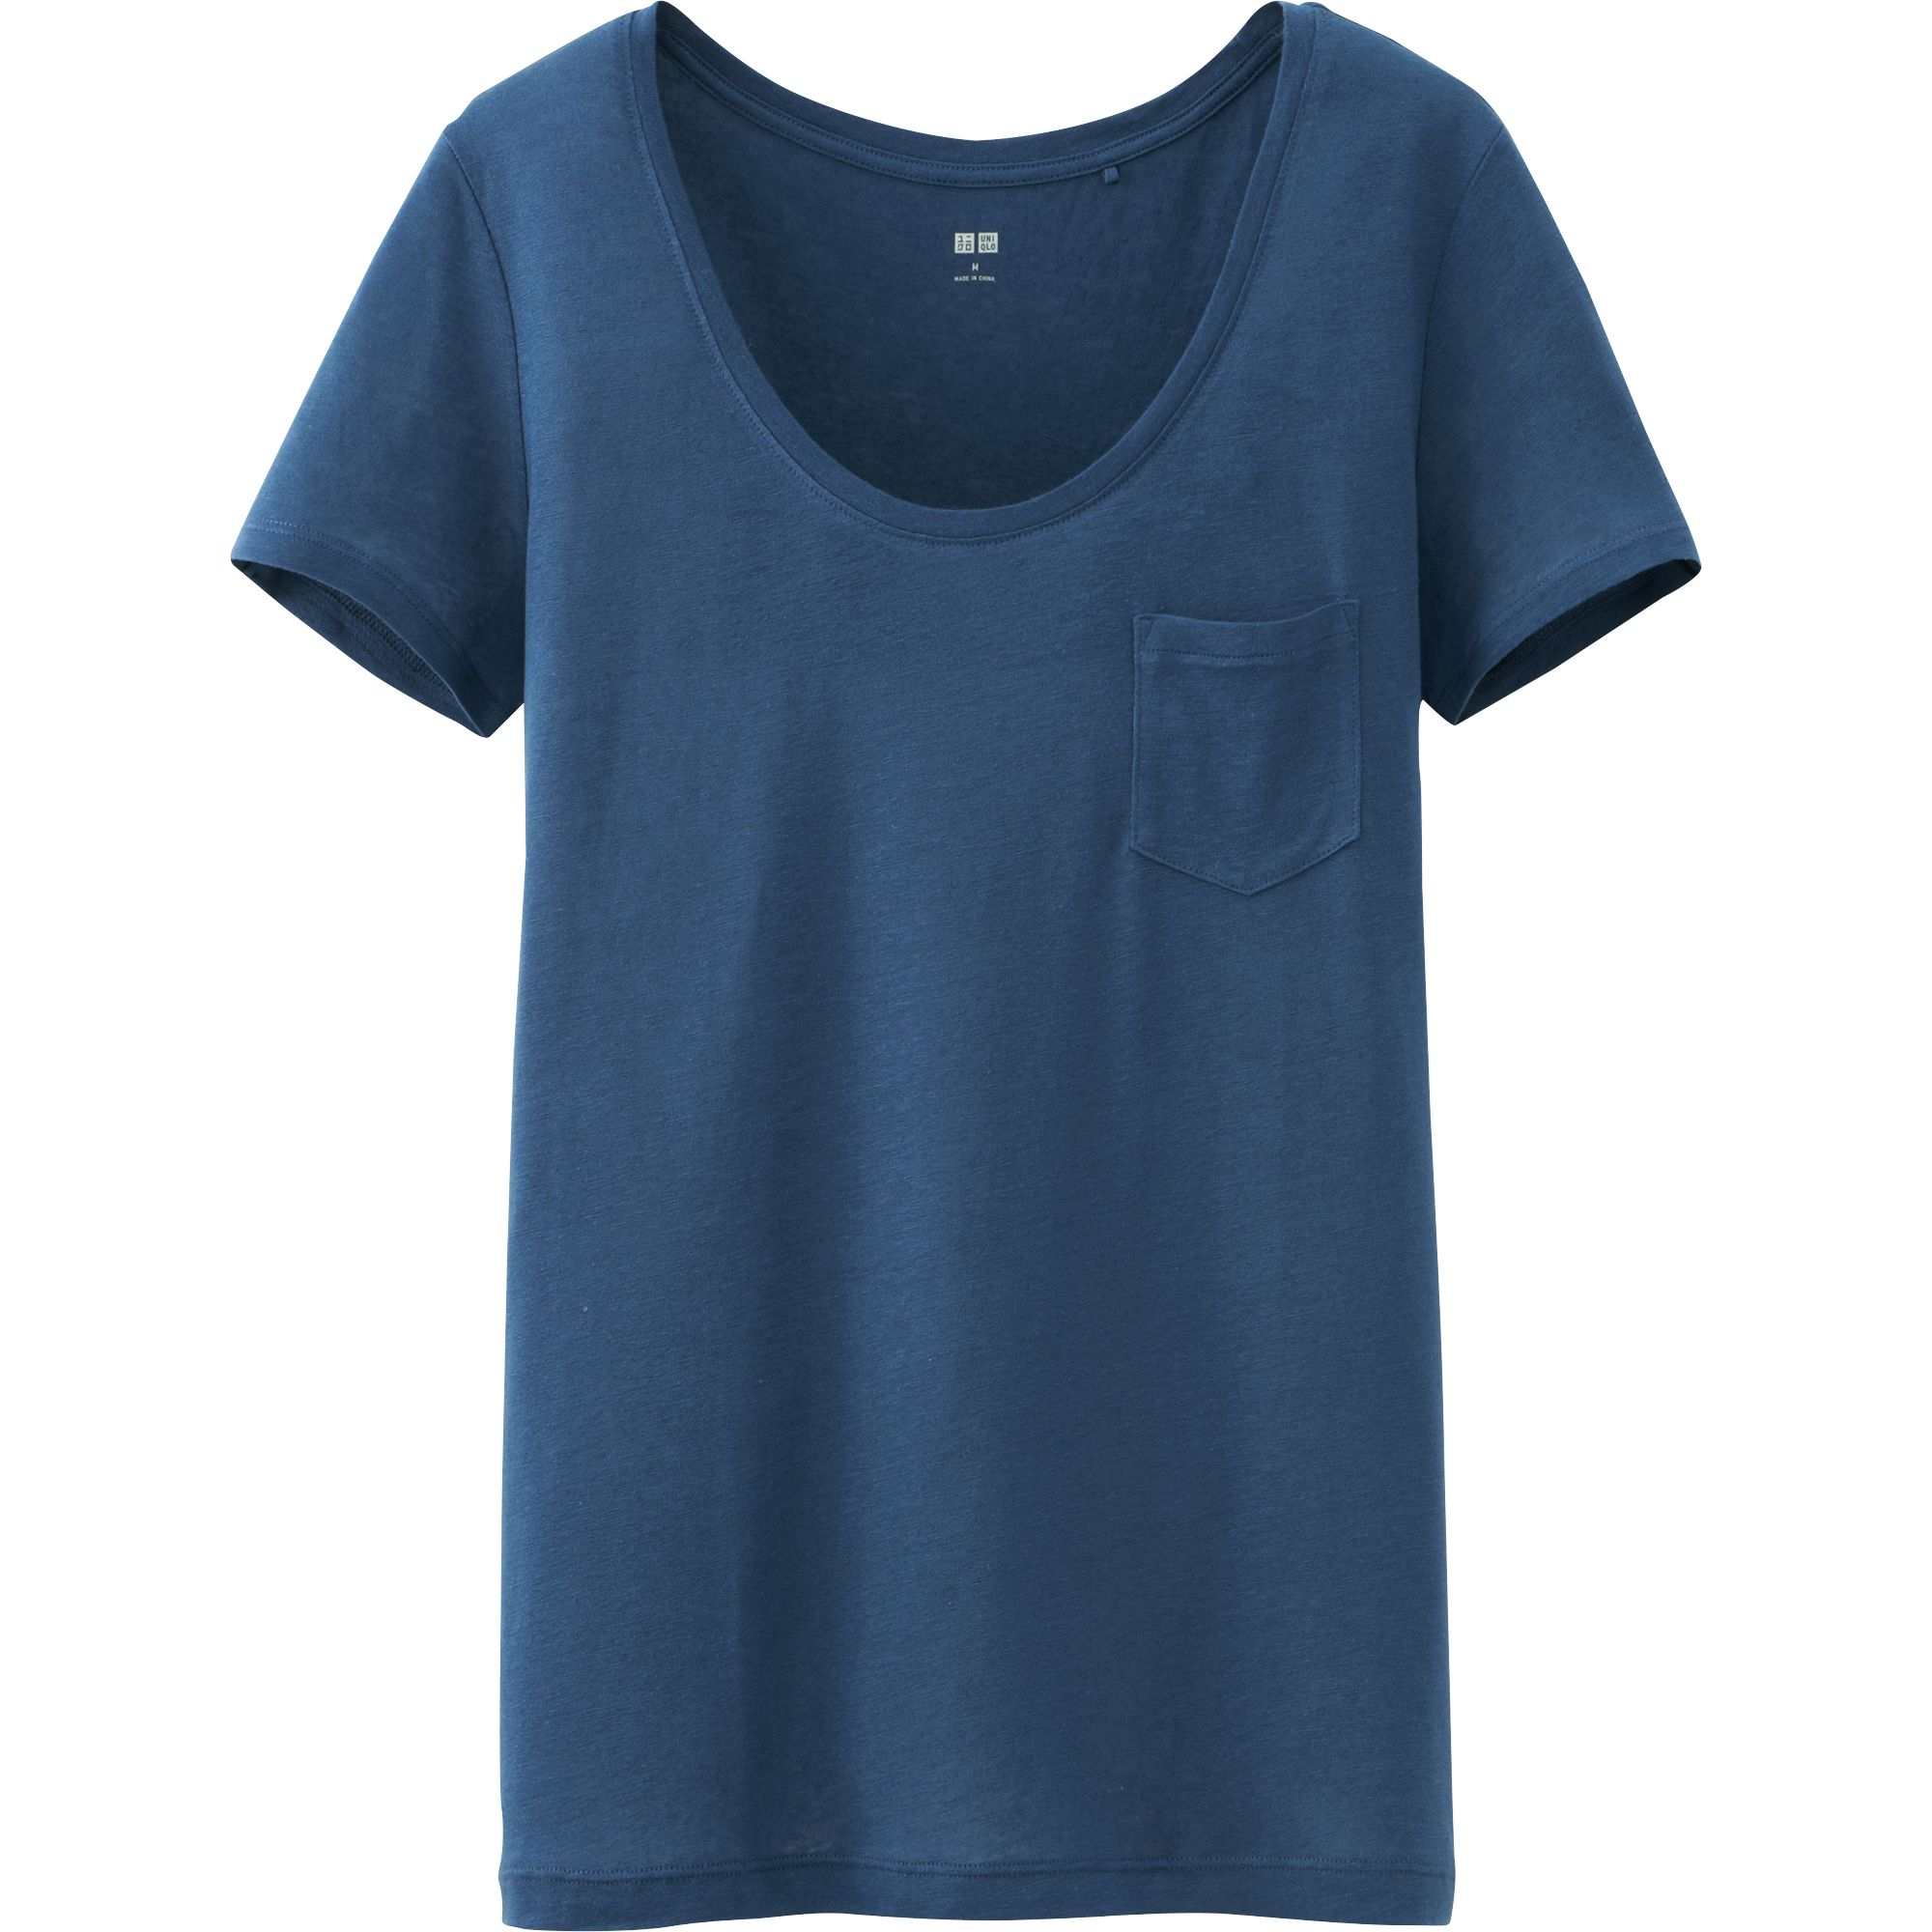 Uniqlo Modal Linen Blended Short Sleeve Tshirt in Blue | Lyst